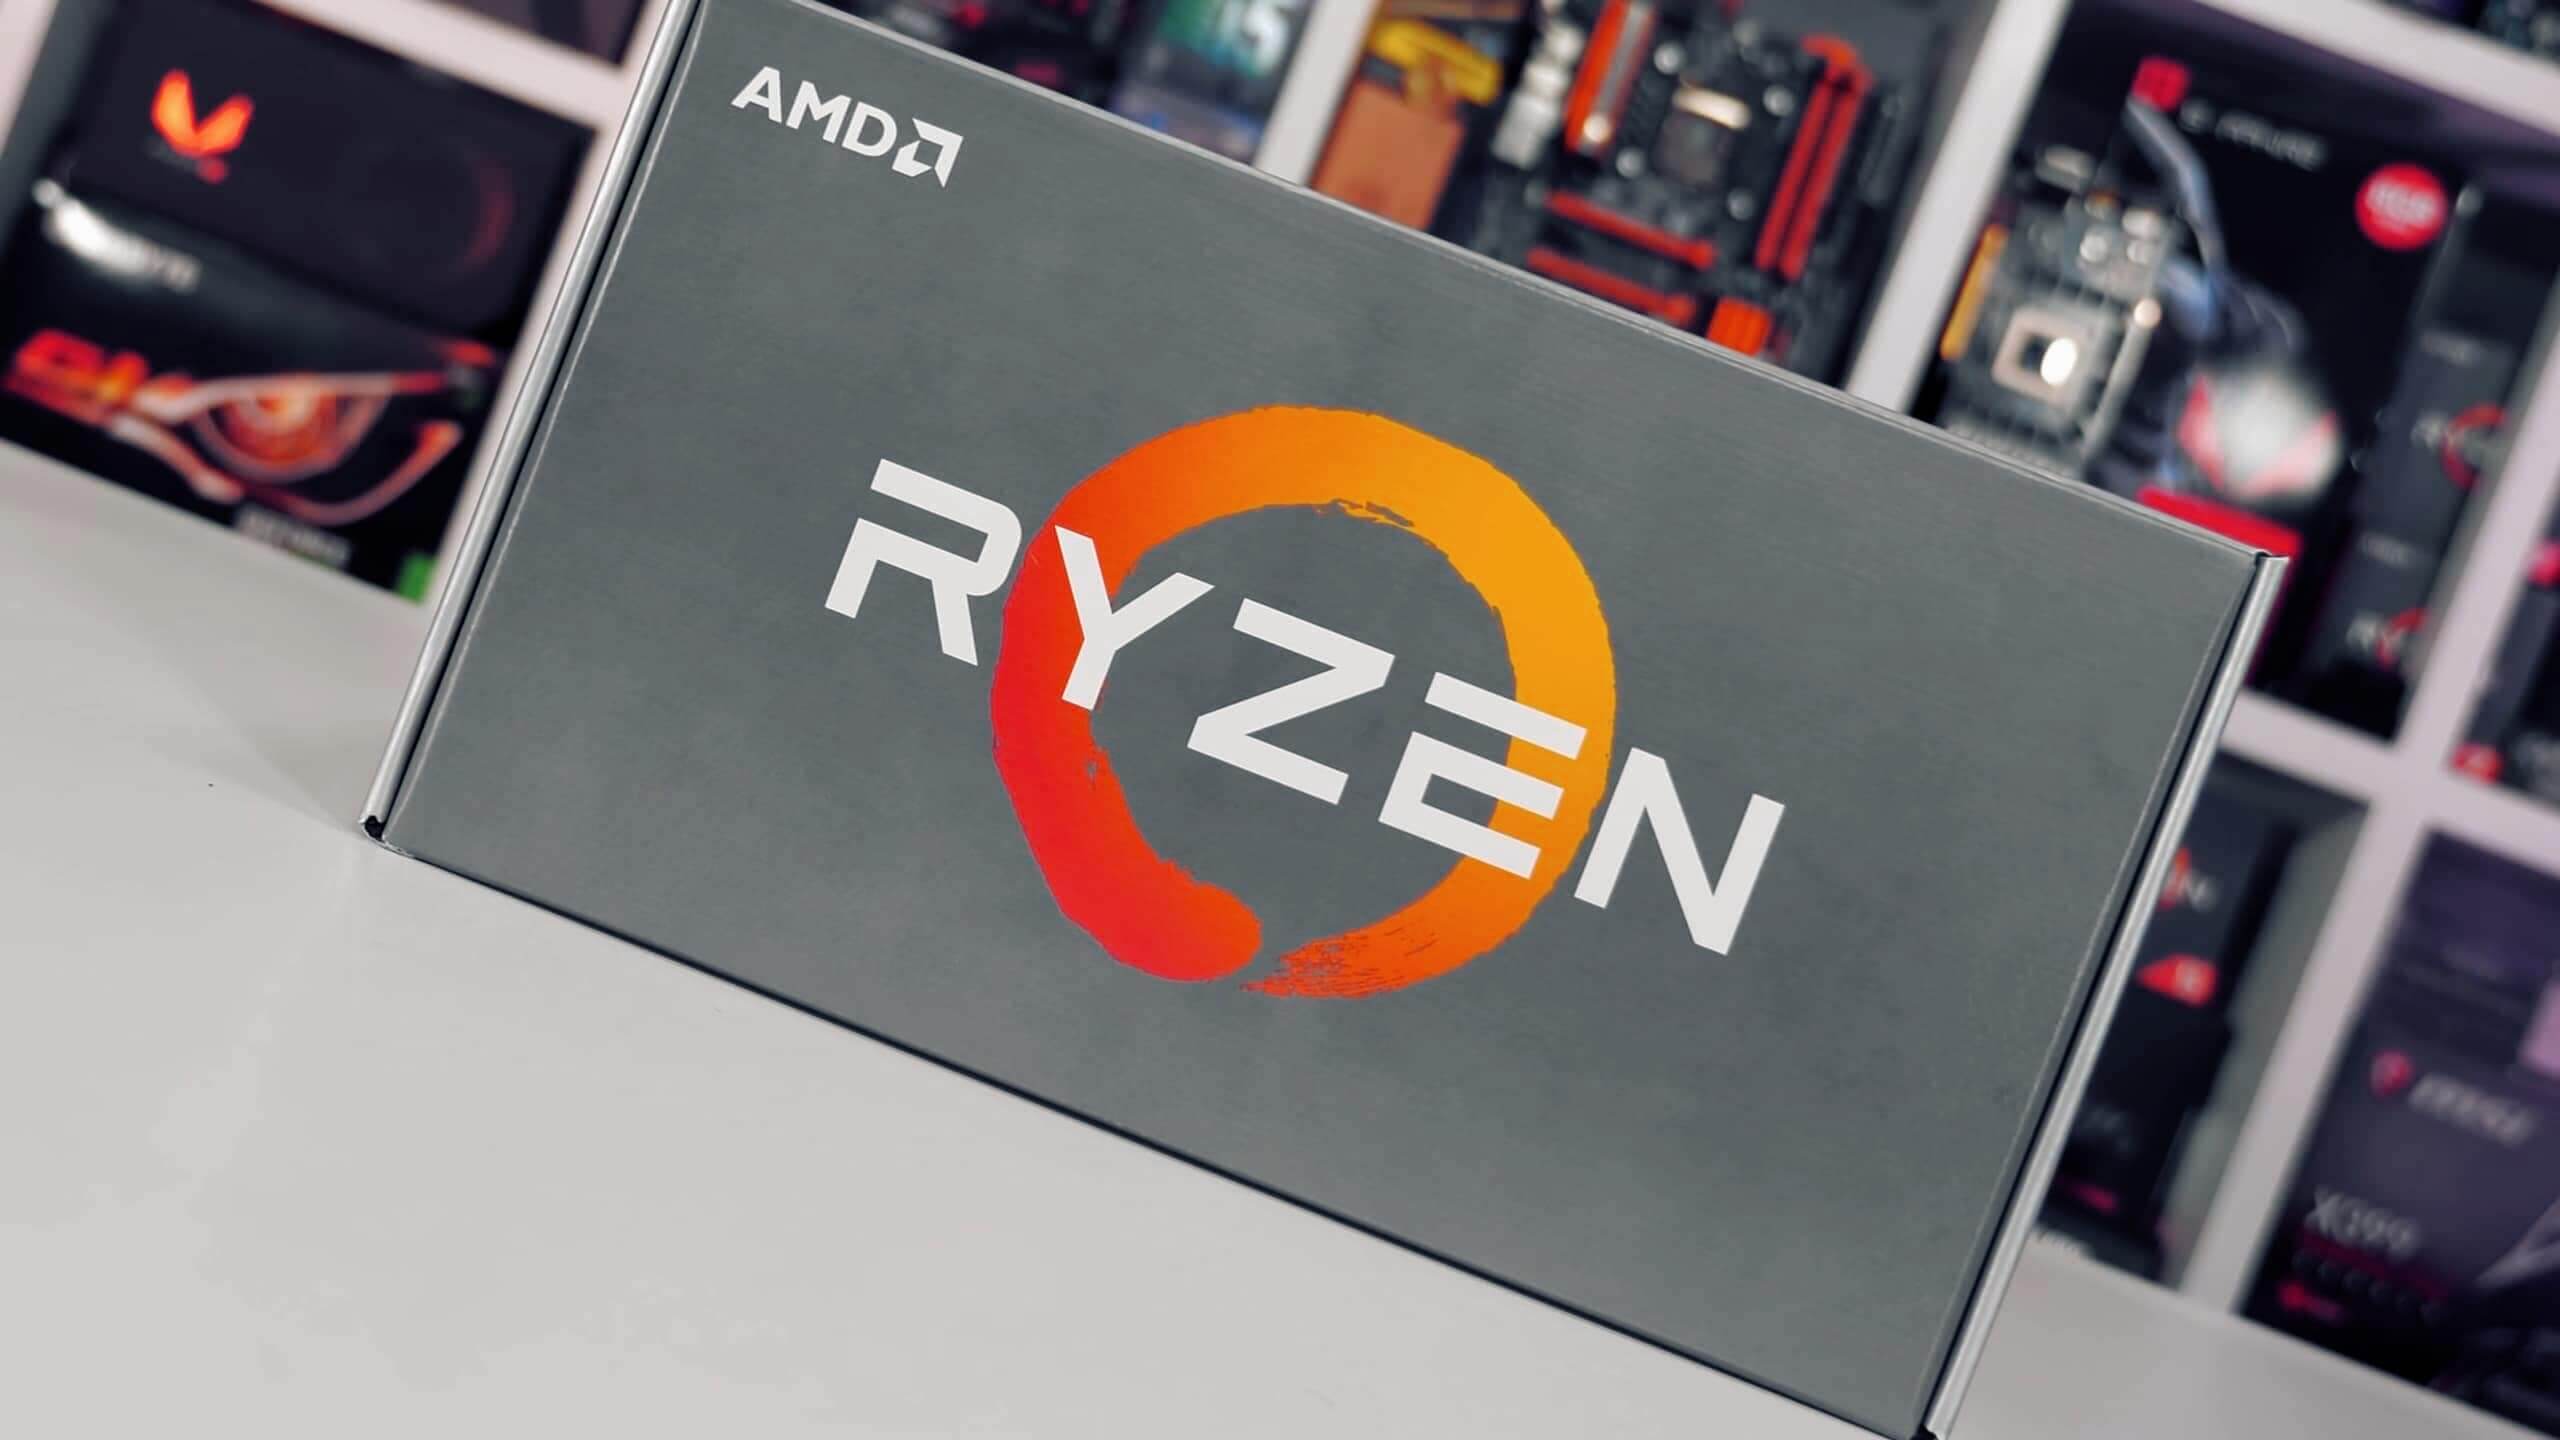 AMD dominates Amazon's best-selling CPU chart, despite Intel's discounts